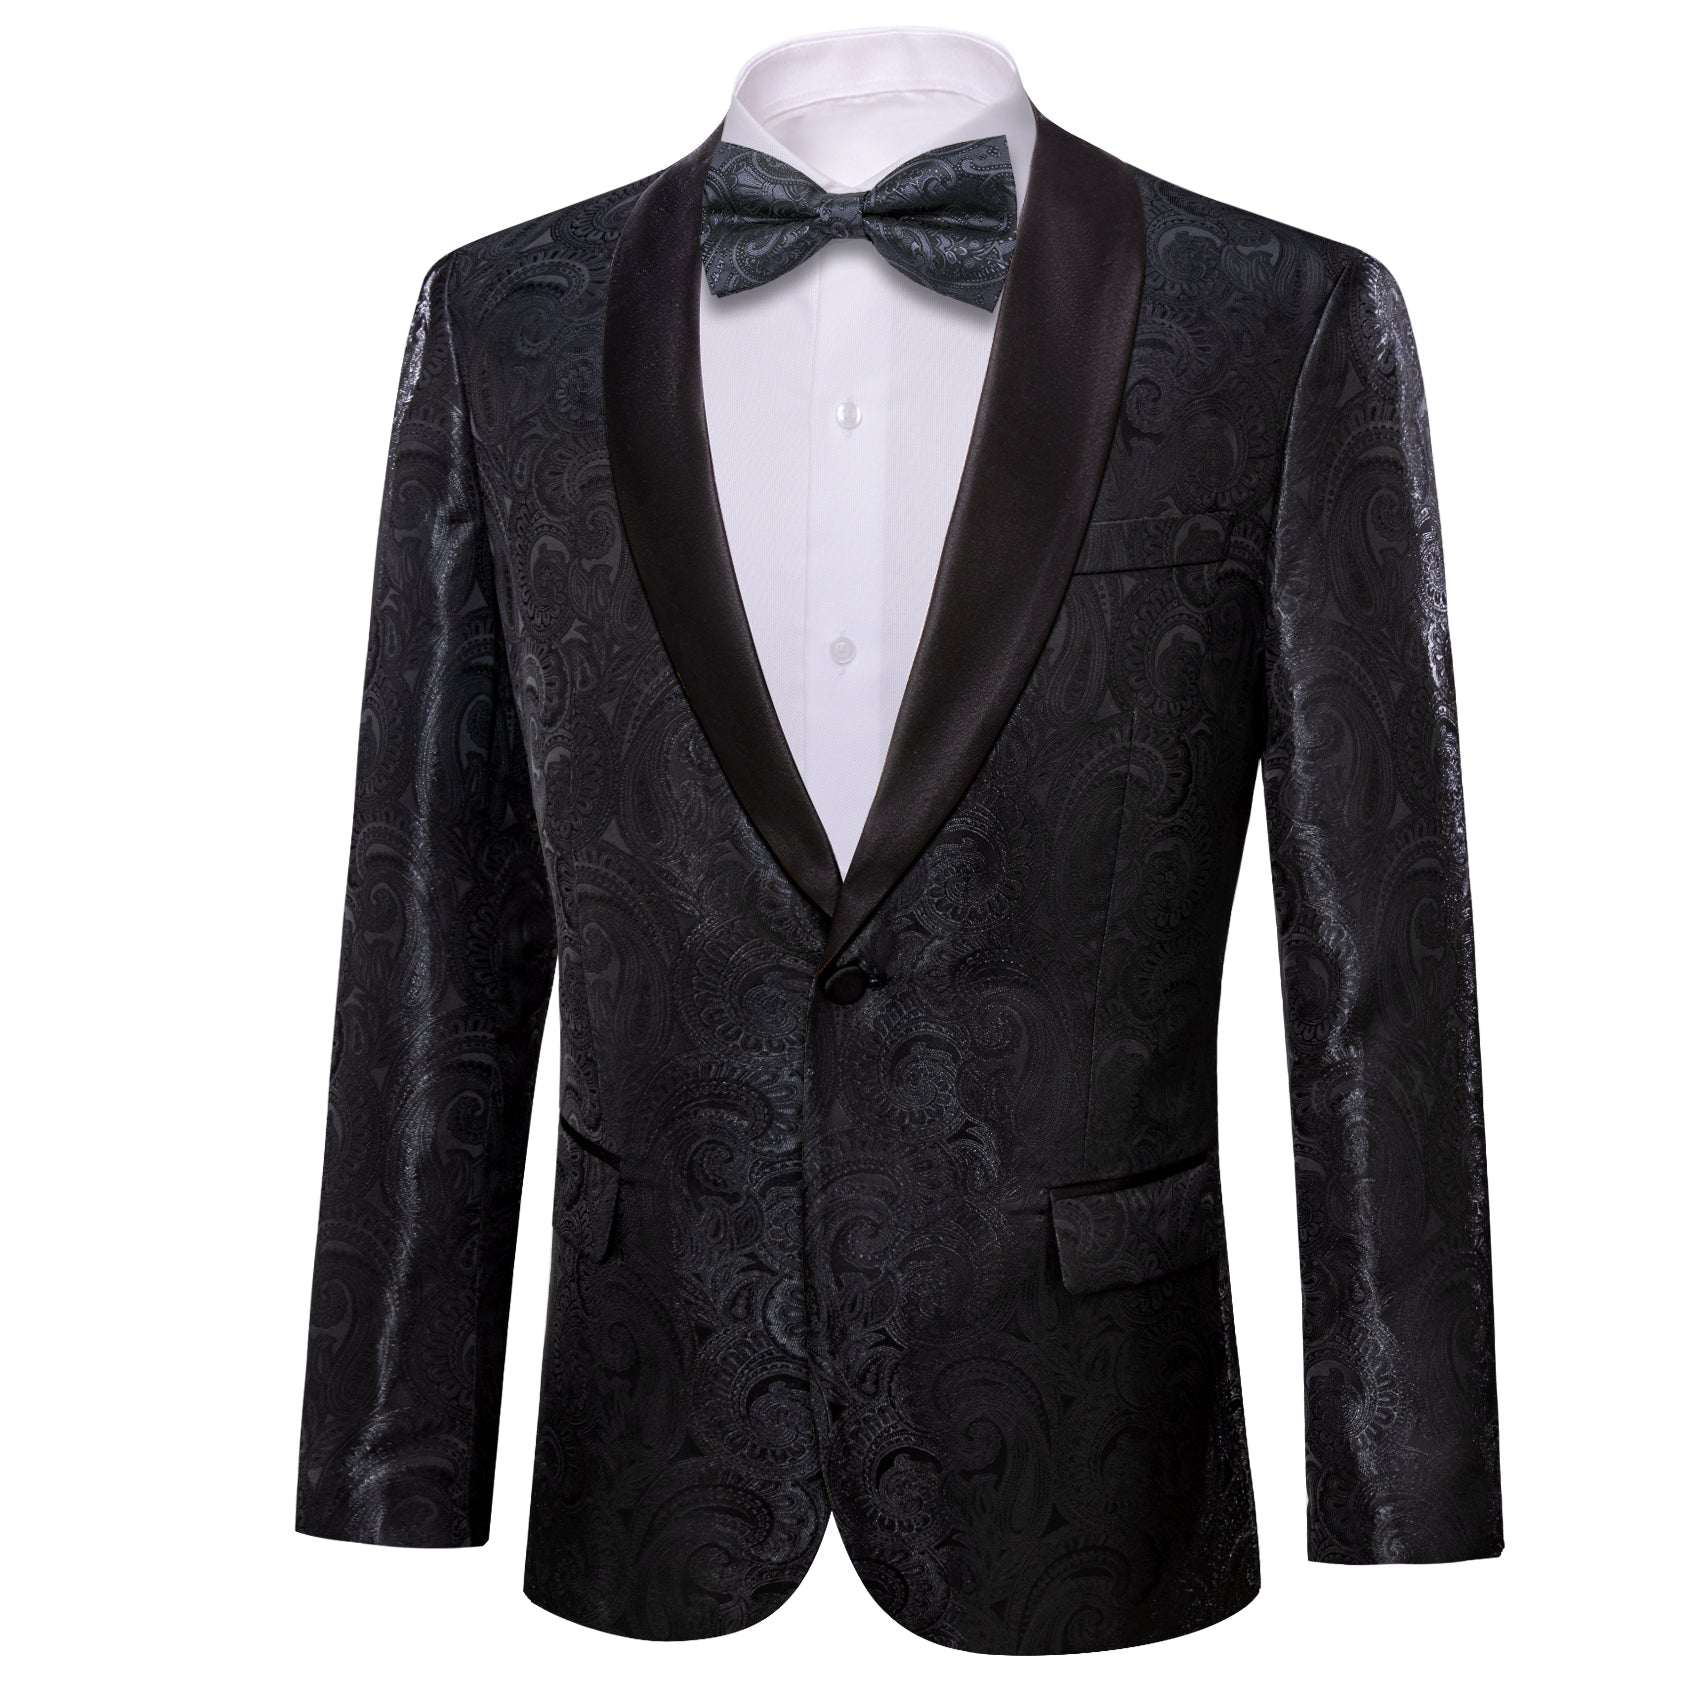 Barry Wang Wedding Suit Black Paisley Jacquard Blazer with Bowtie